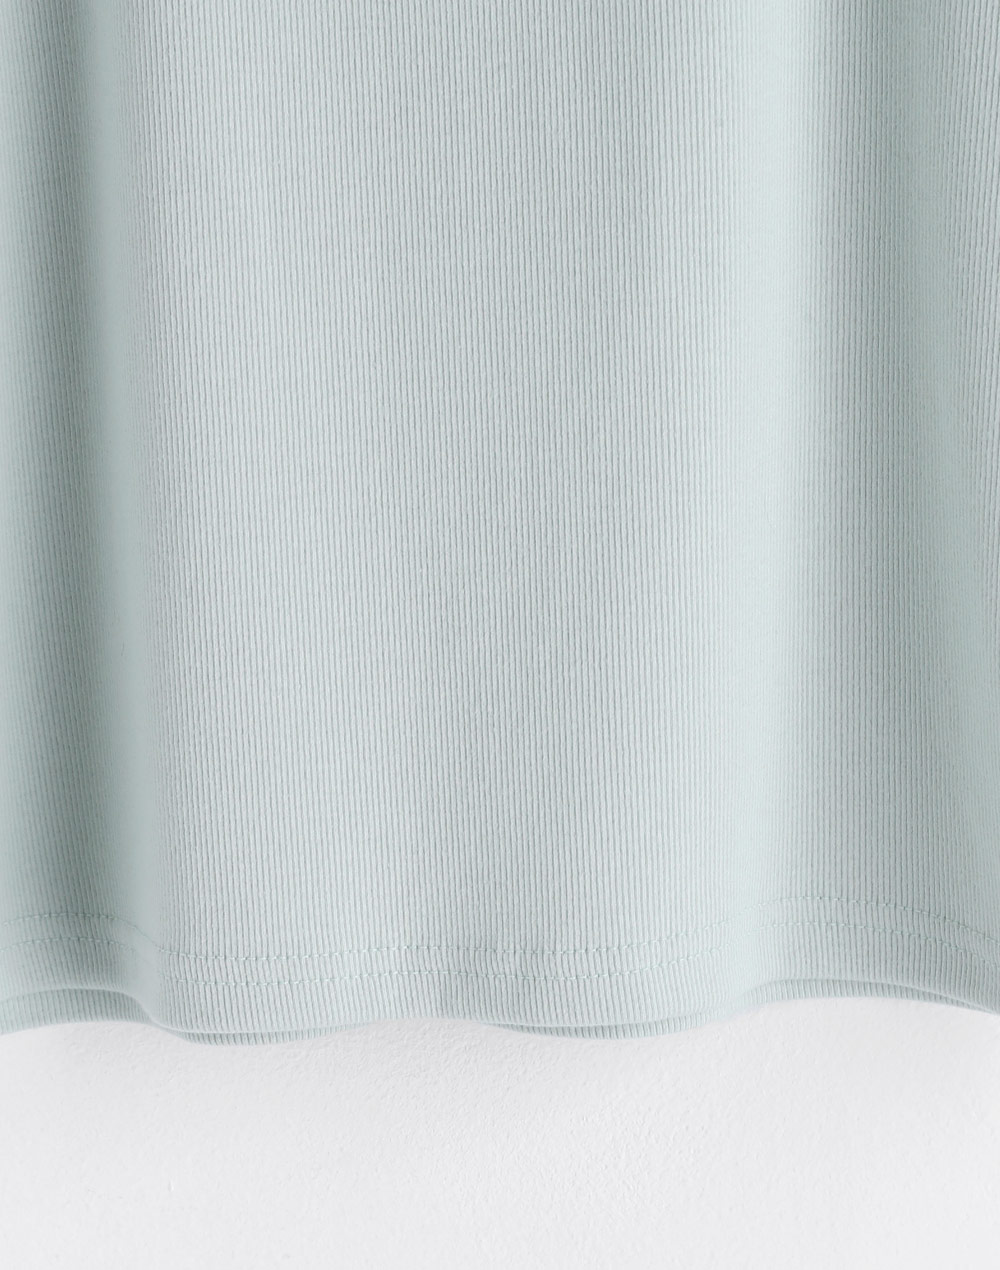 square simple Tshirt・t282176（トップス/Tシャツ）| rirry_71 | 東京ガールズマーケット